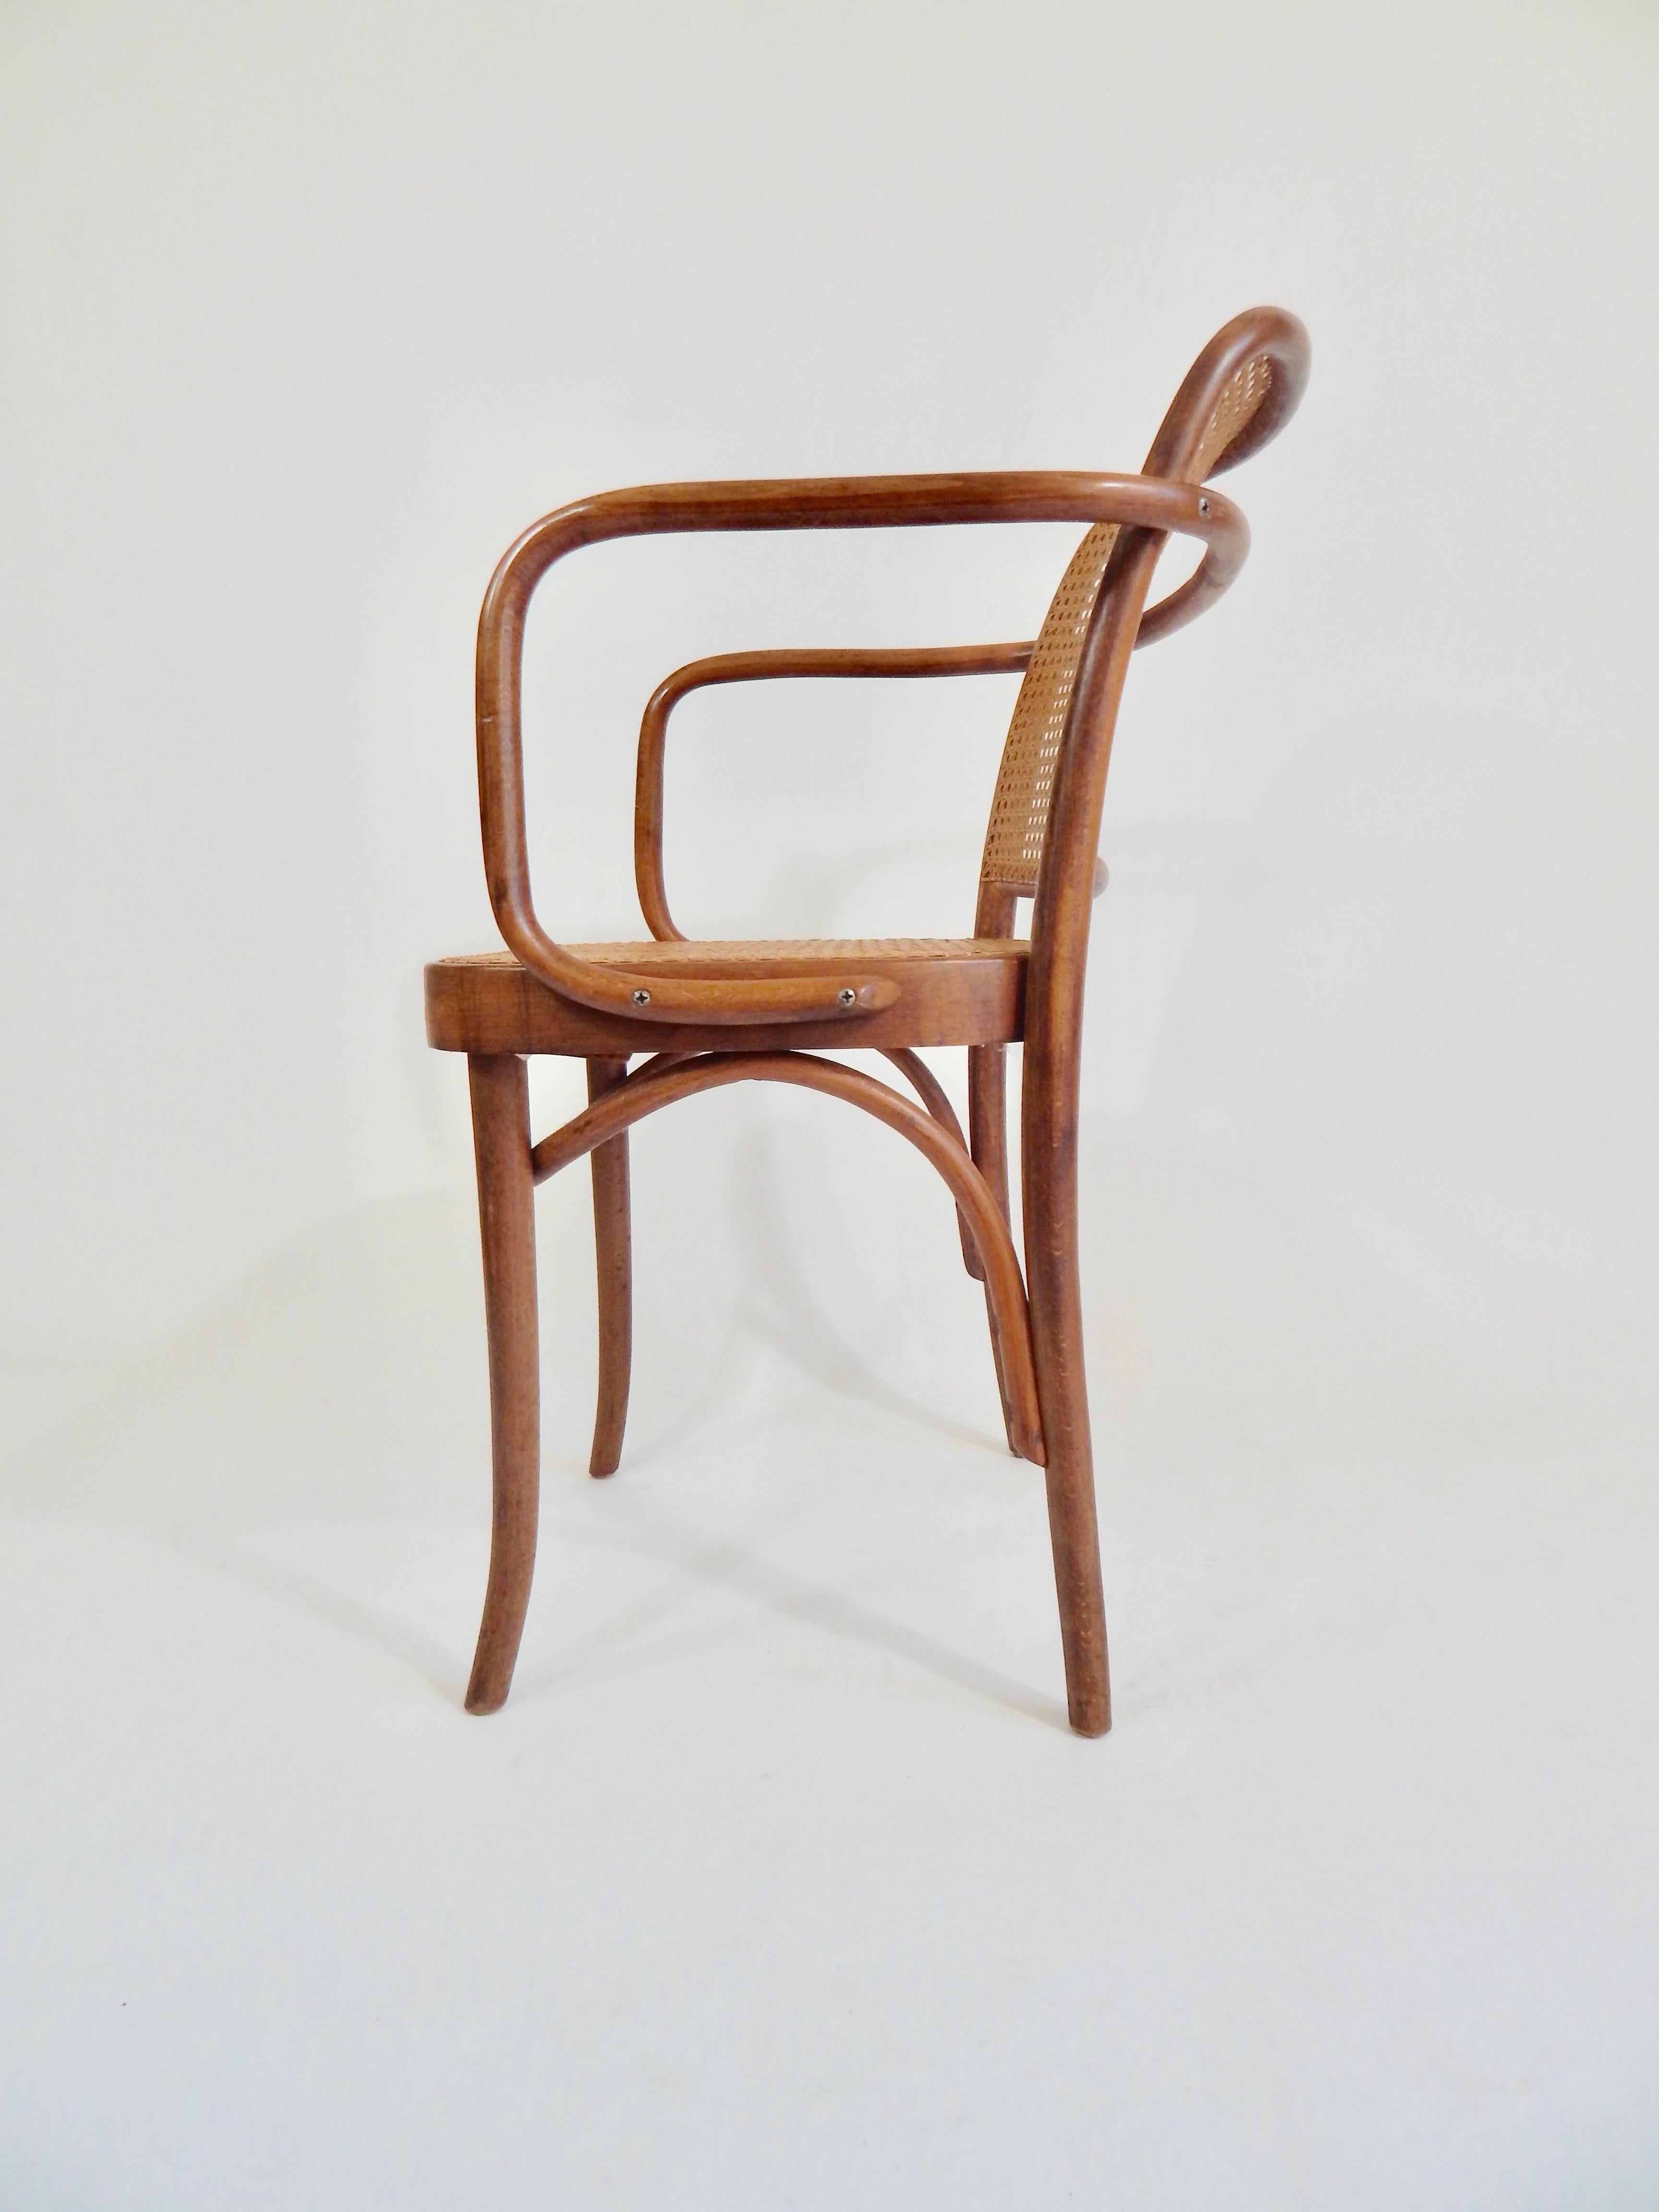 Caning Original 1920s Josef Hoffmann Thonet Bentwood Cane Chairs, Poland